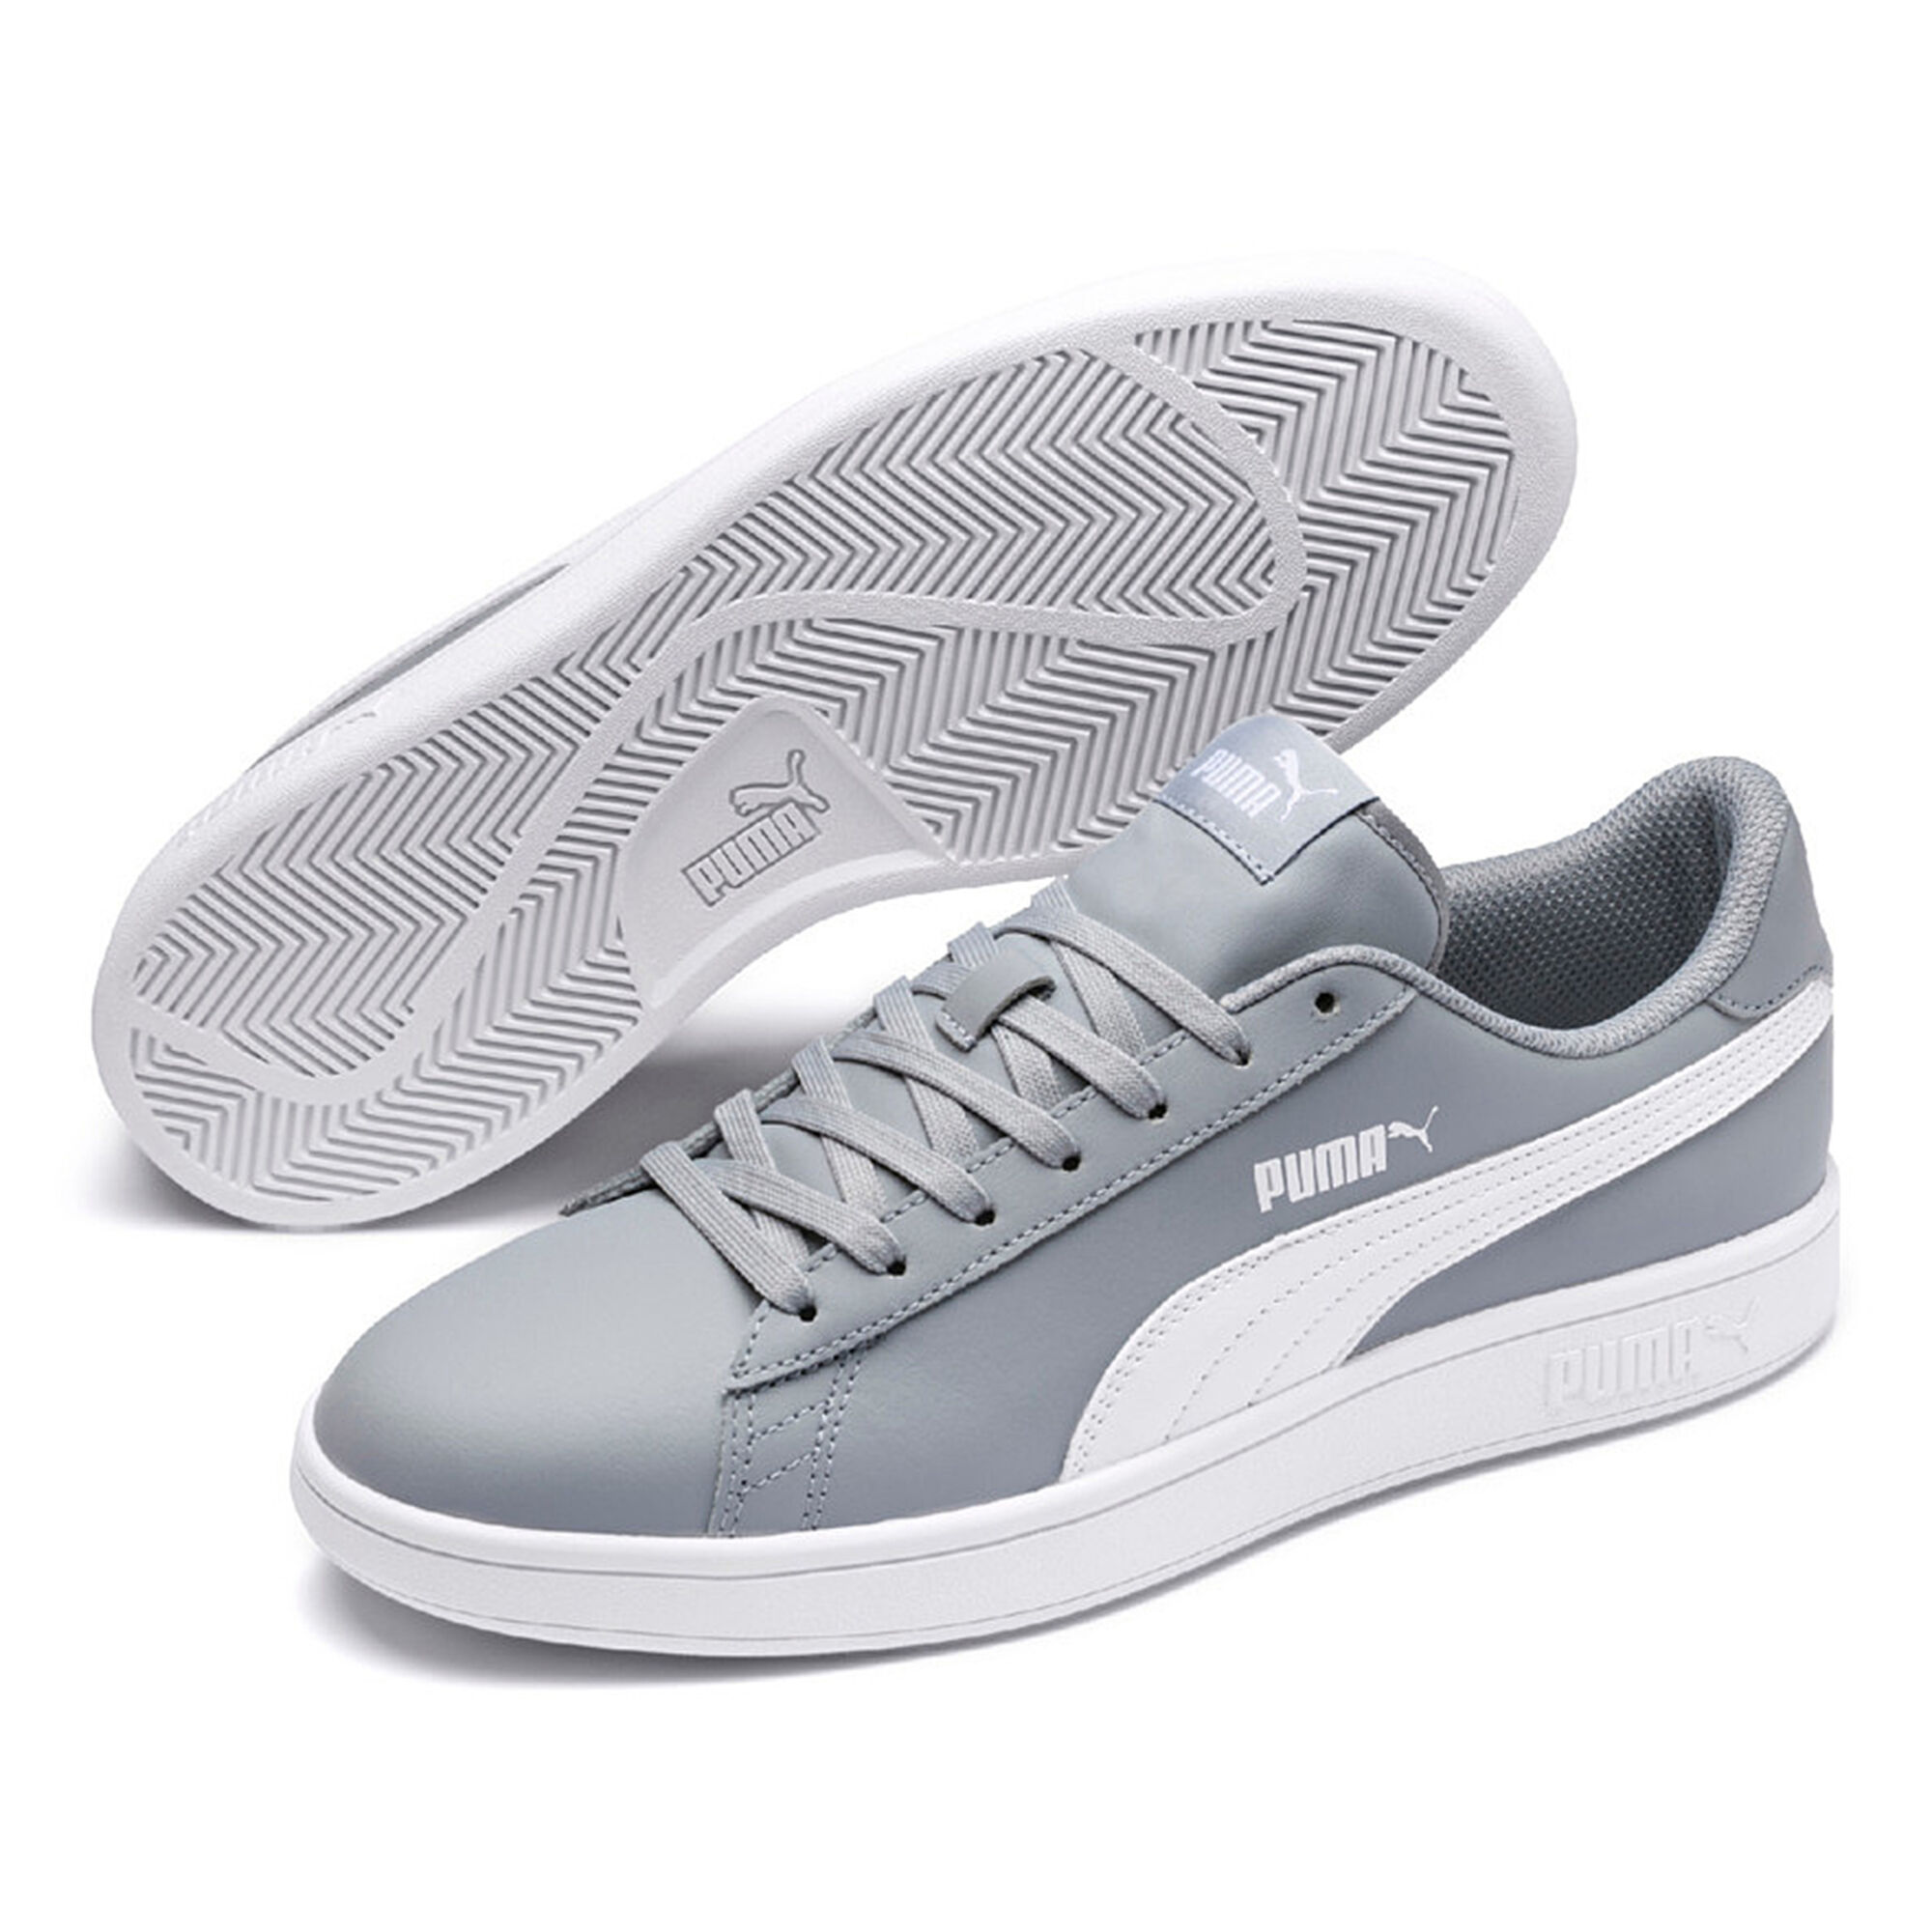 Buy Puma Smash V2 L Sneakers Men Grey, White online